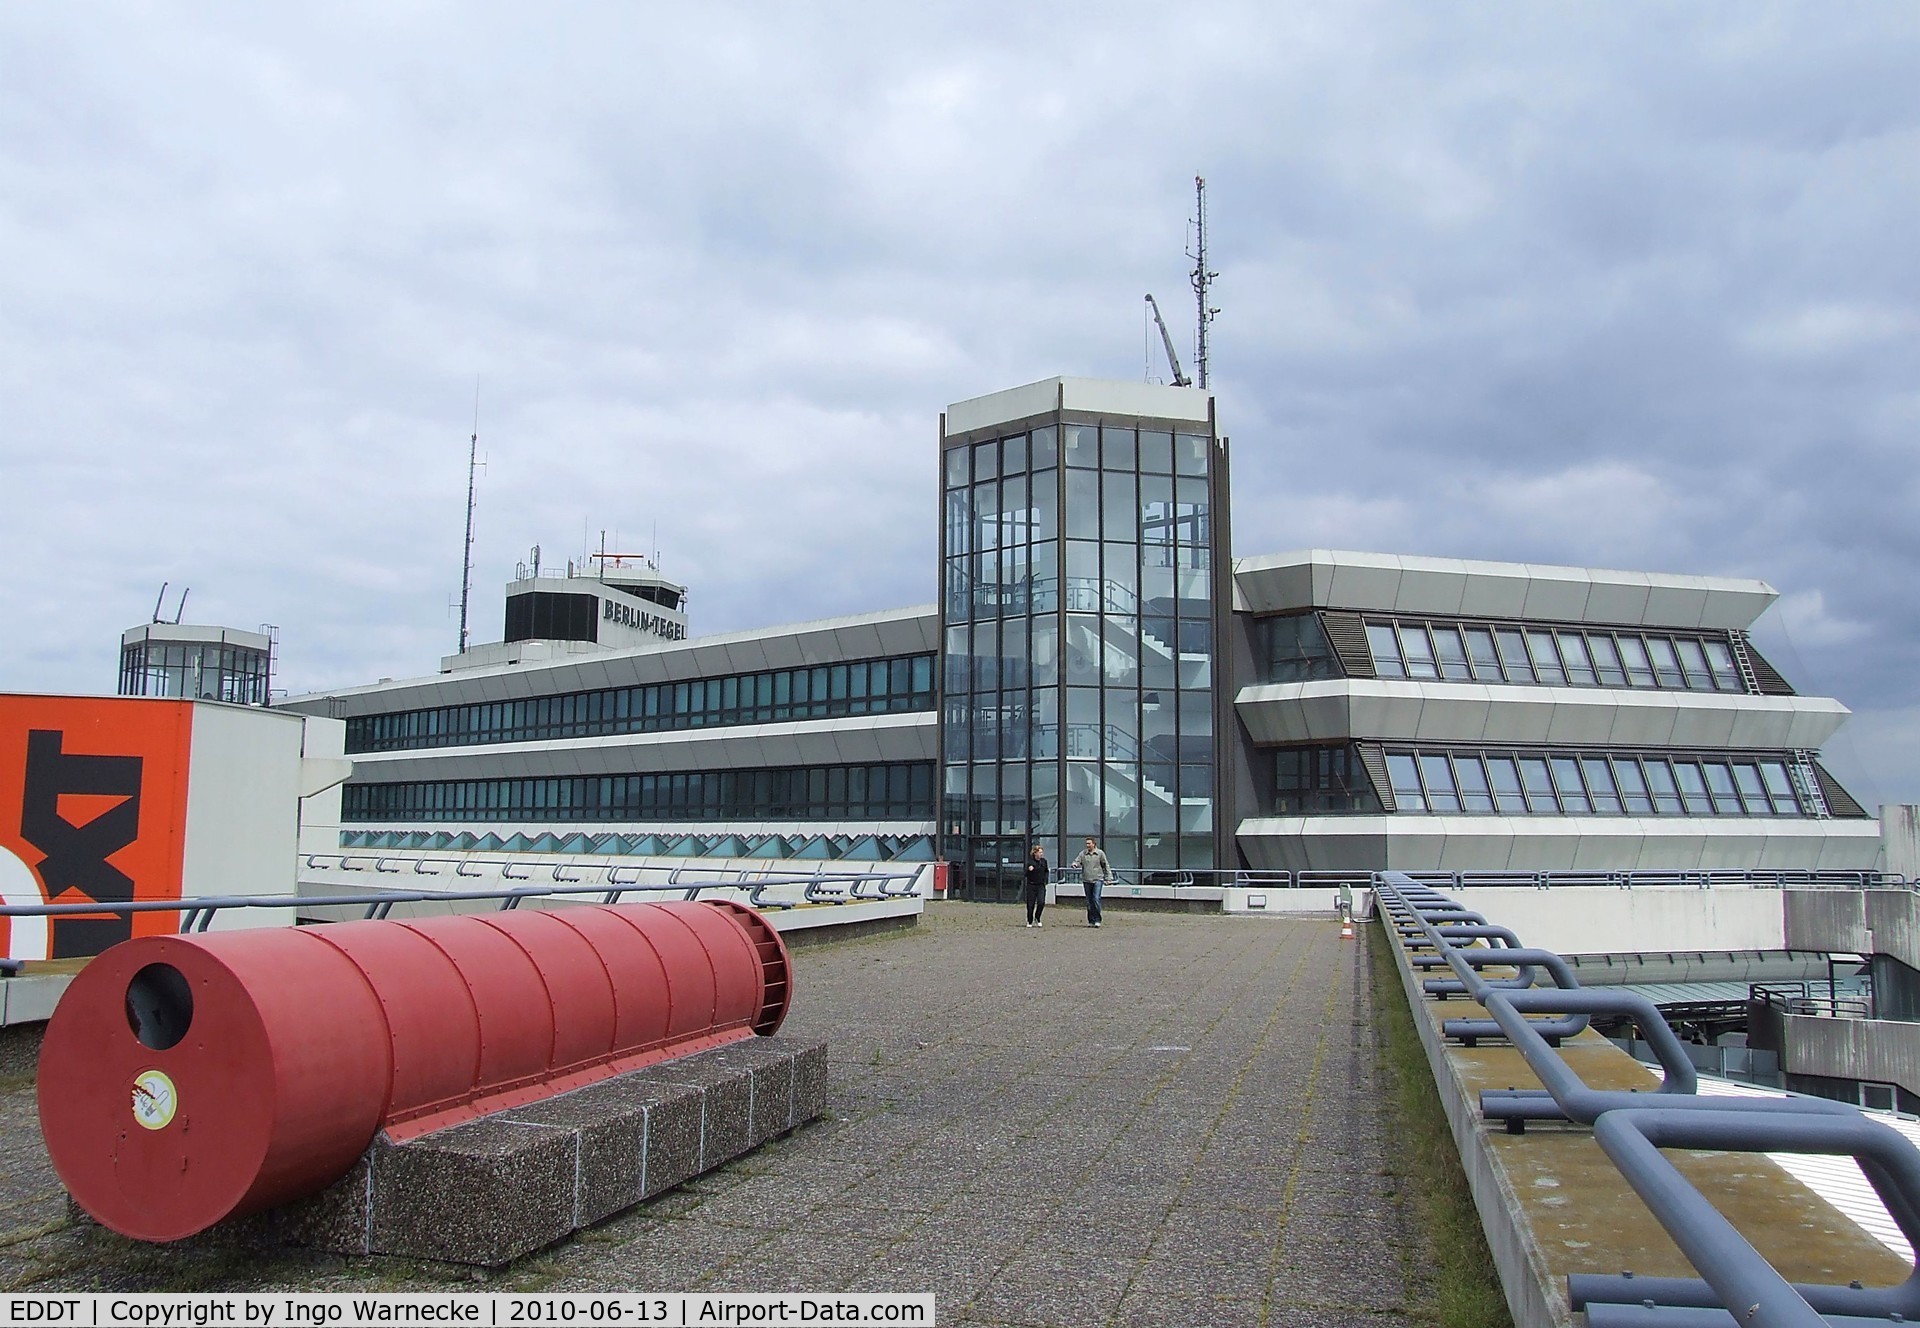 Tegel International Airport (closing in 2011), Berlin Germany (EDDT) - visitors terrace and main terminal building at Berlin Tegel airport